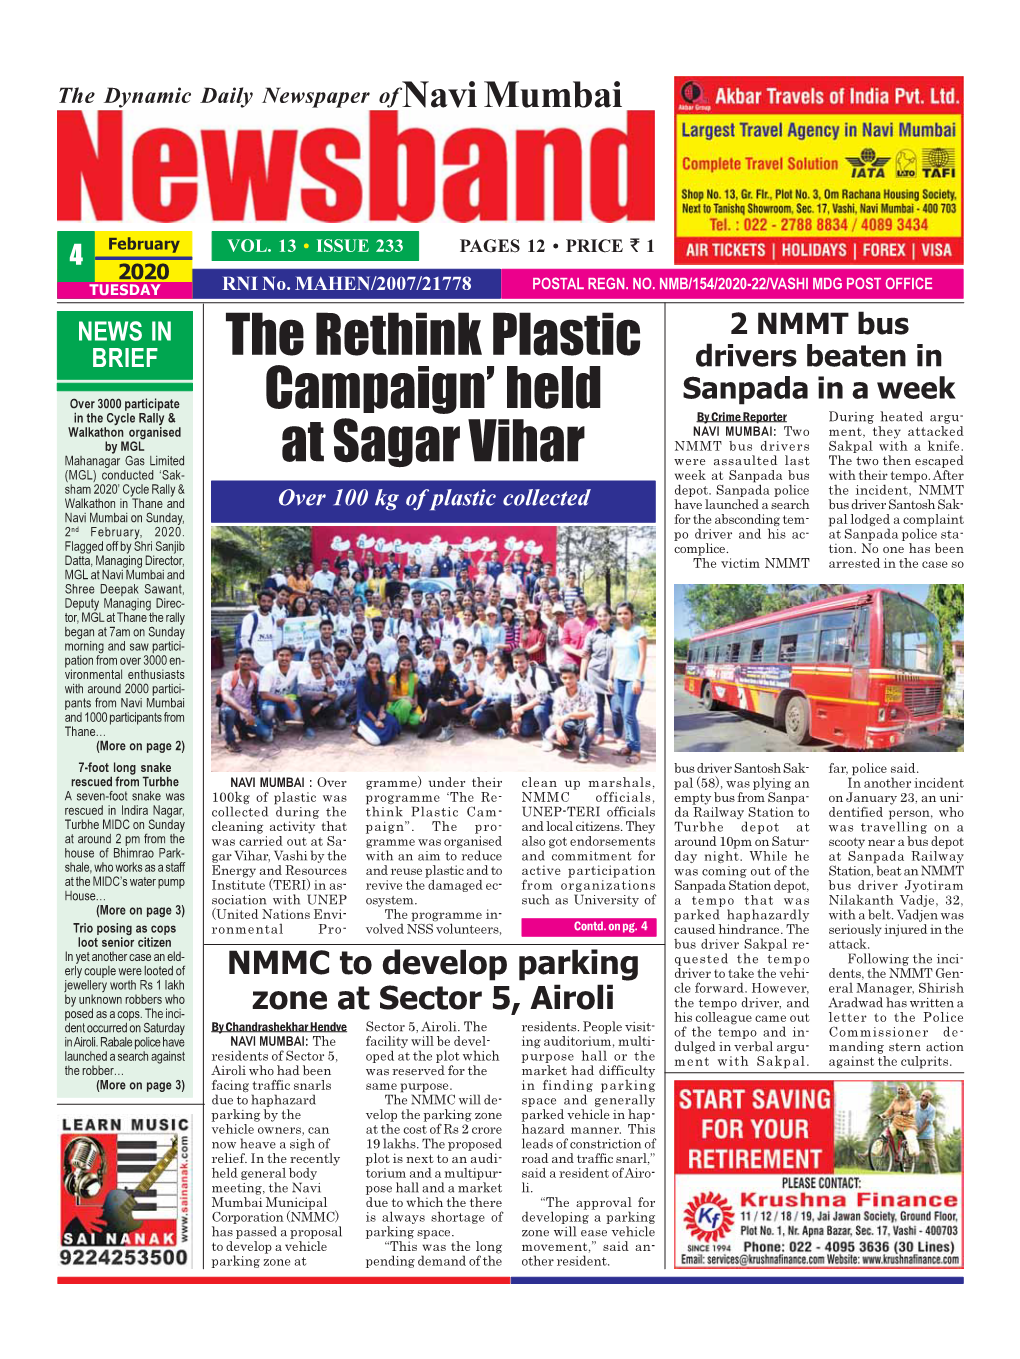 The Rethink Plastic Campaign' Held at Sagar Vihar